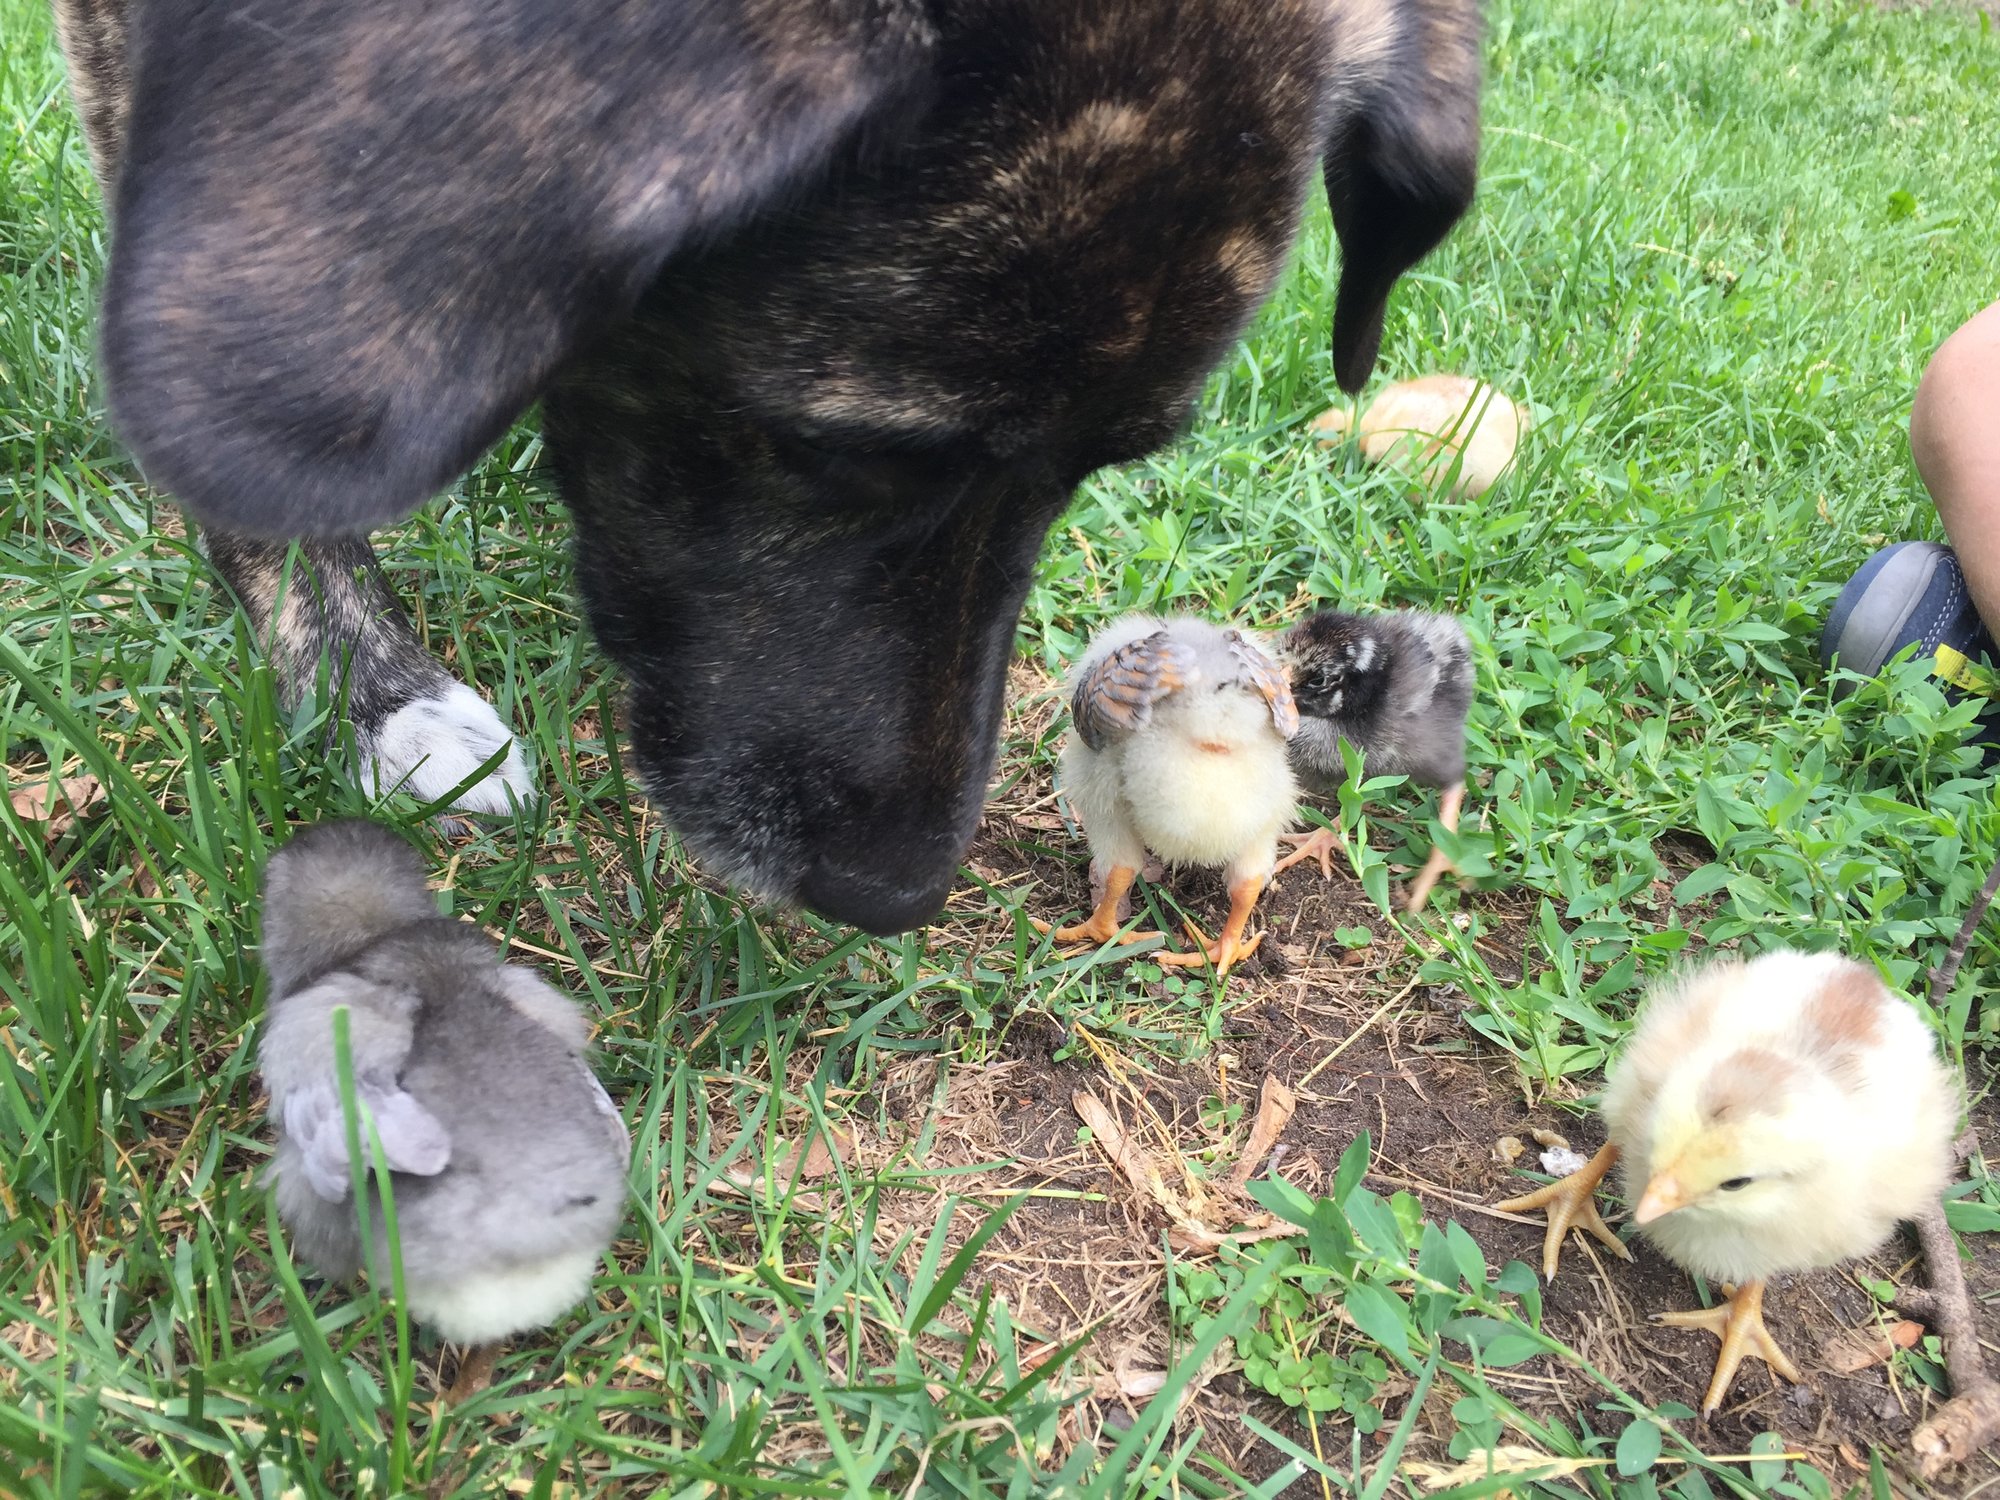 Nola Meeting the Chicks